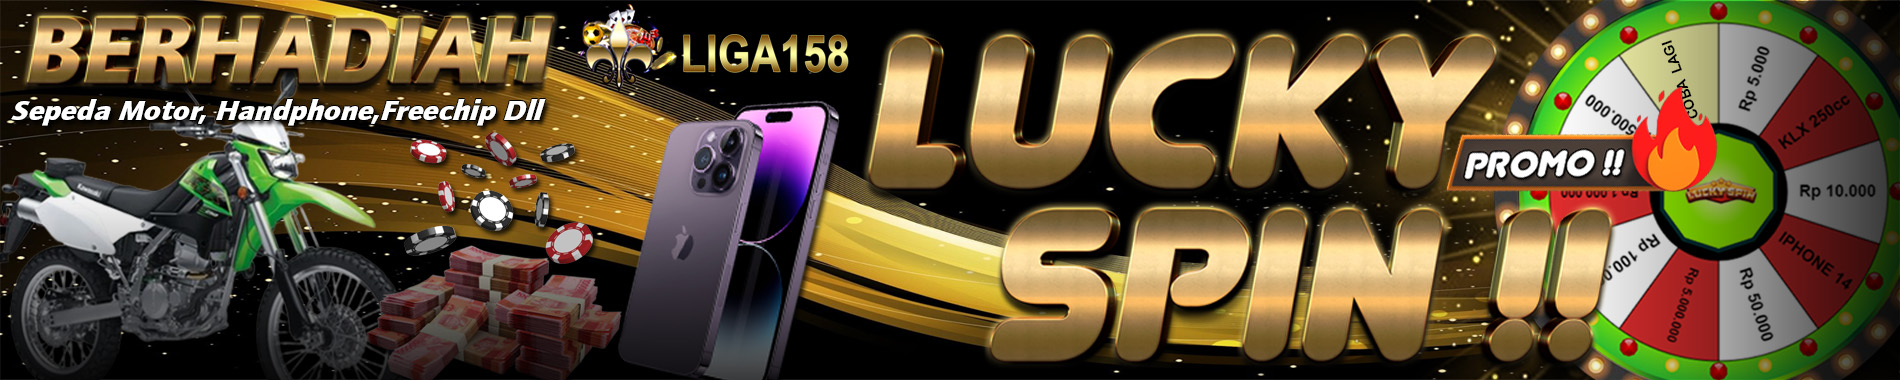 liga158 - event lucky wheel spin